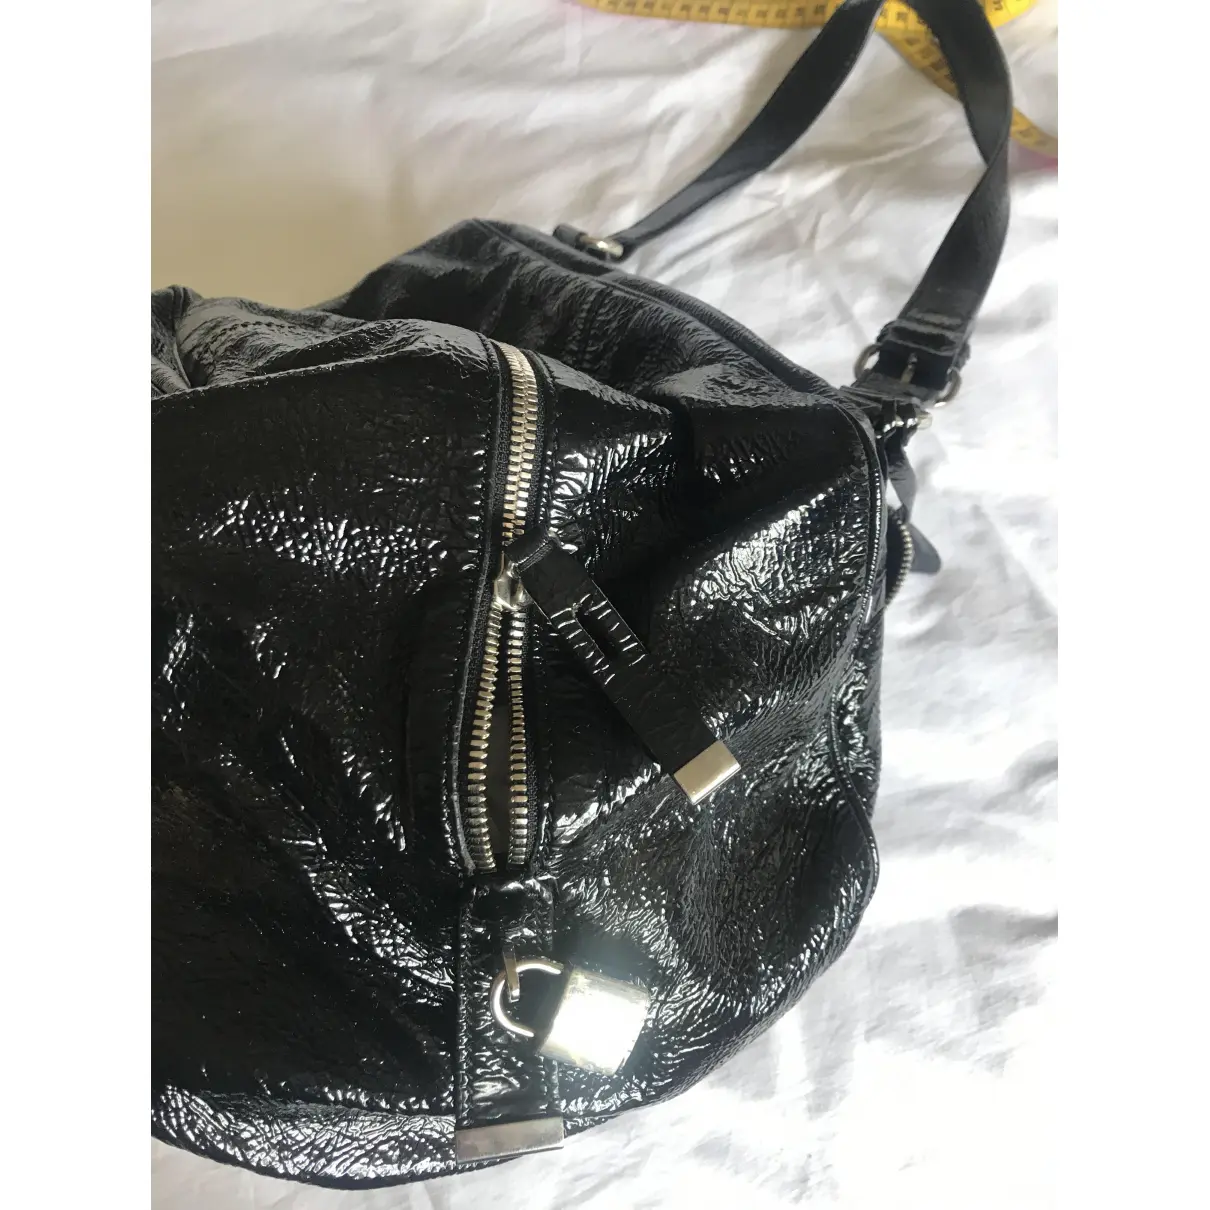 Patent leather handbag Tod's